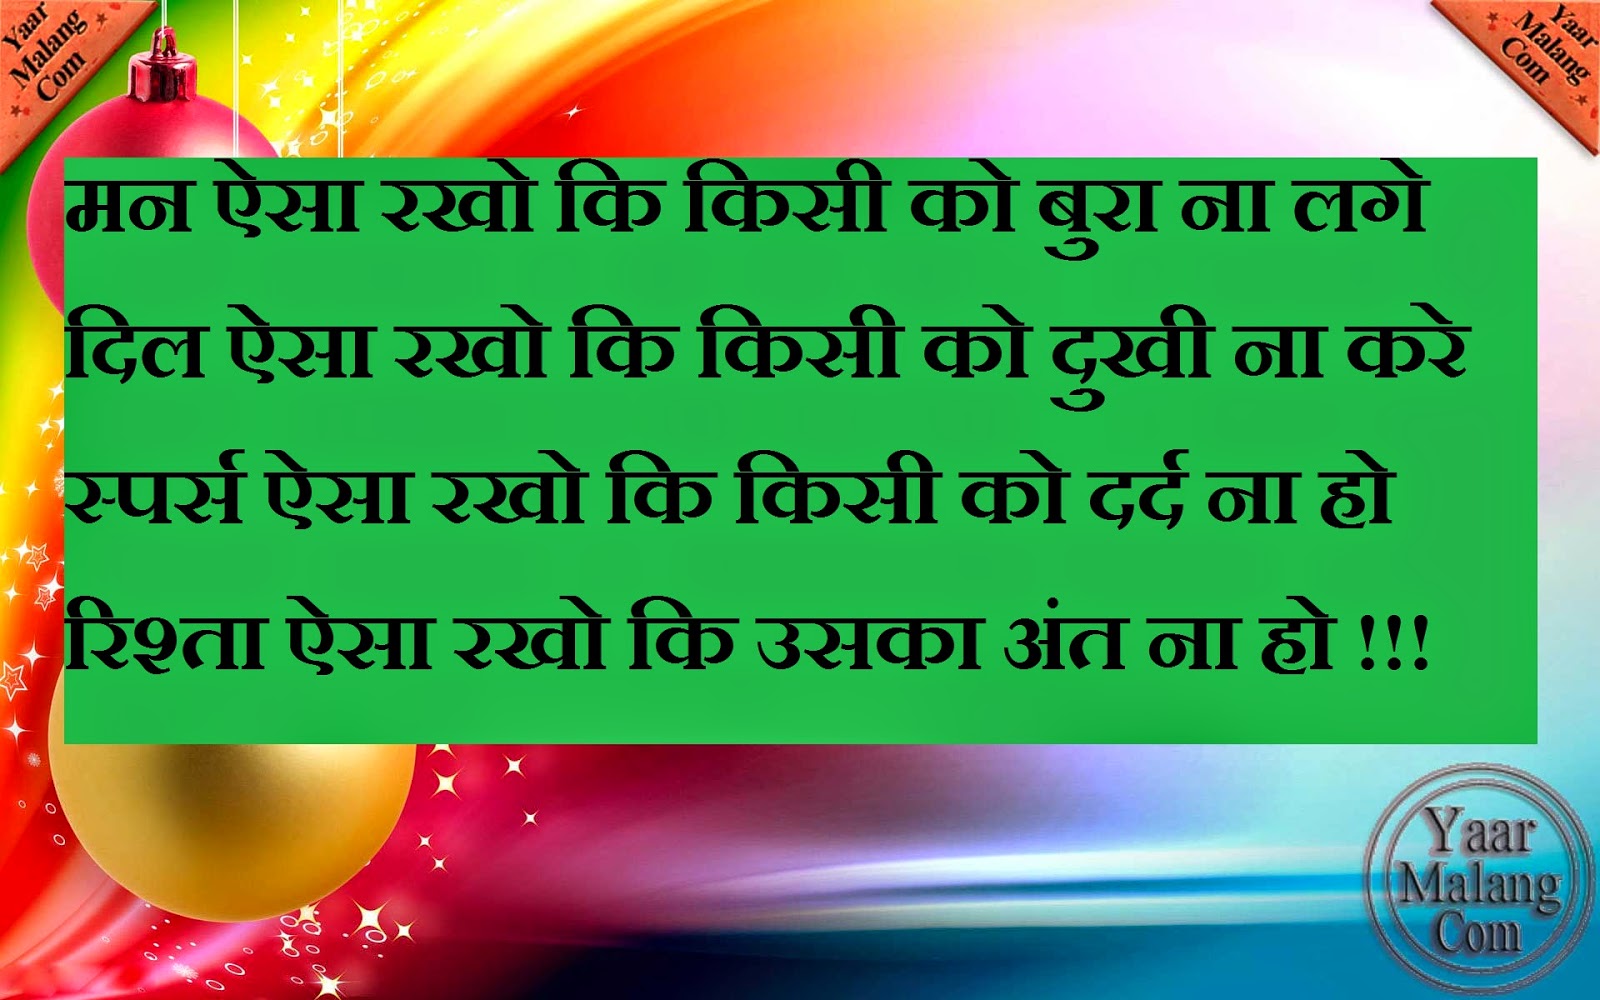 life changing quote Hindi motivational